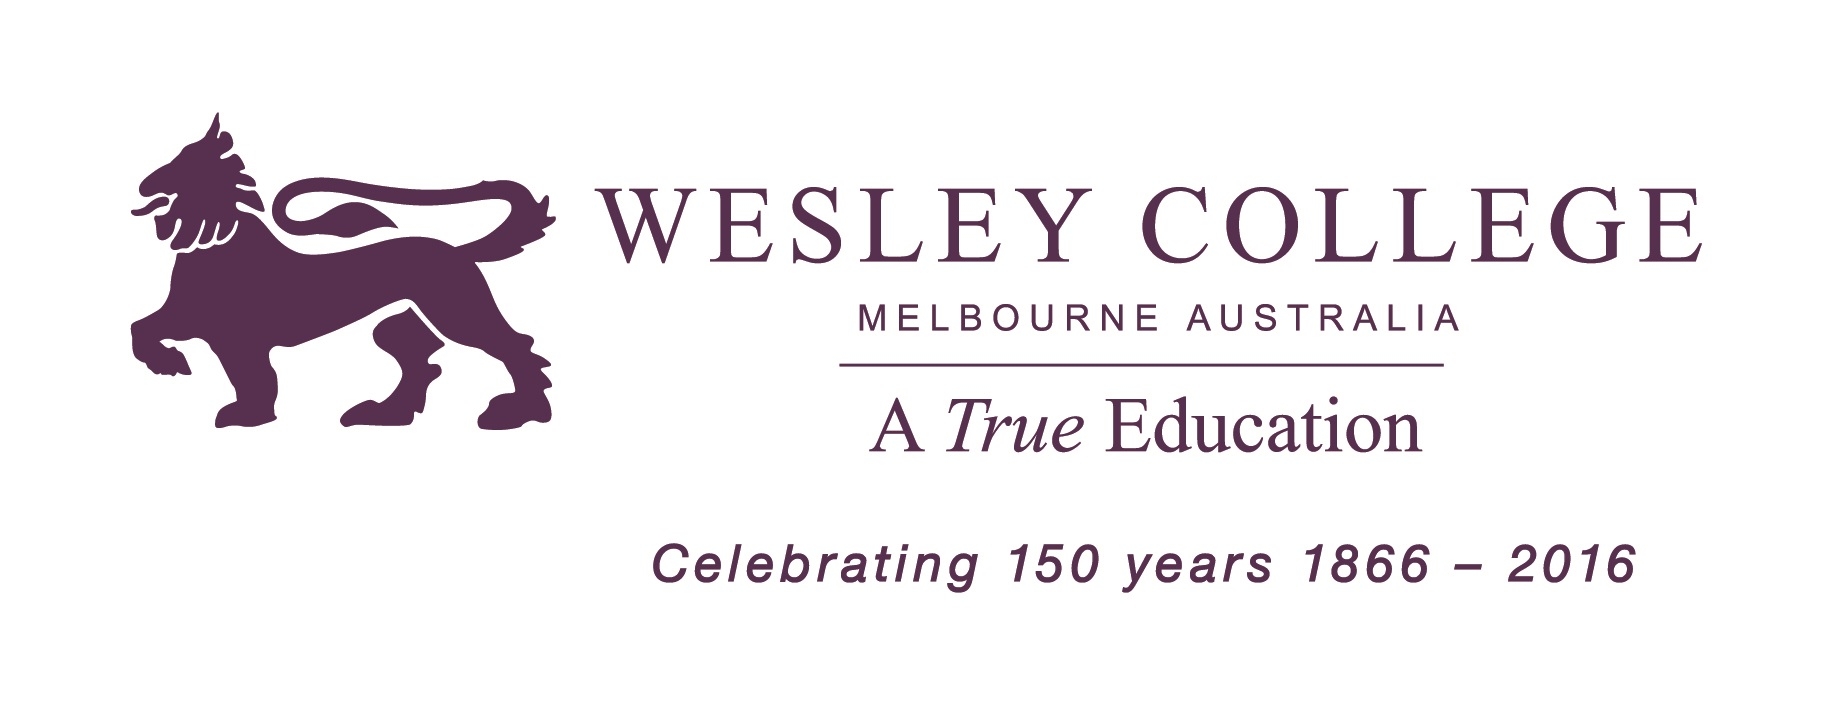 Self Photos / Files - Wesley College_Logo